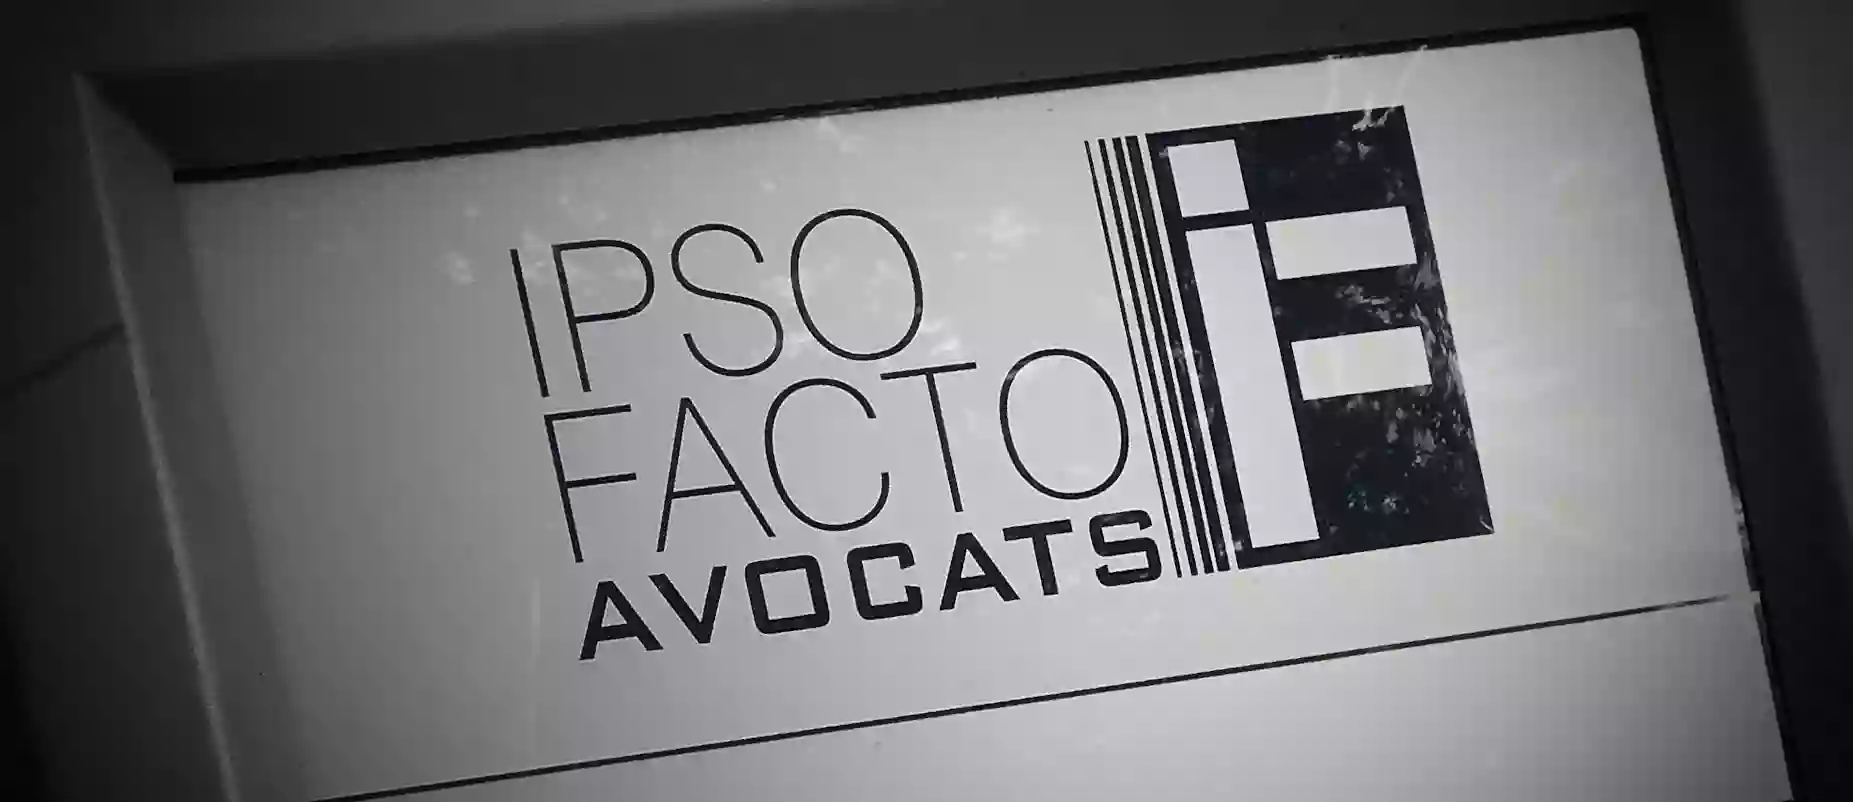 Avocat IPSO FACTO